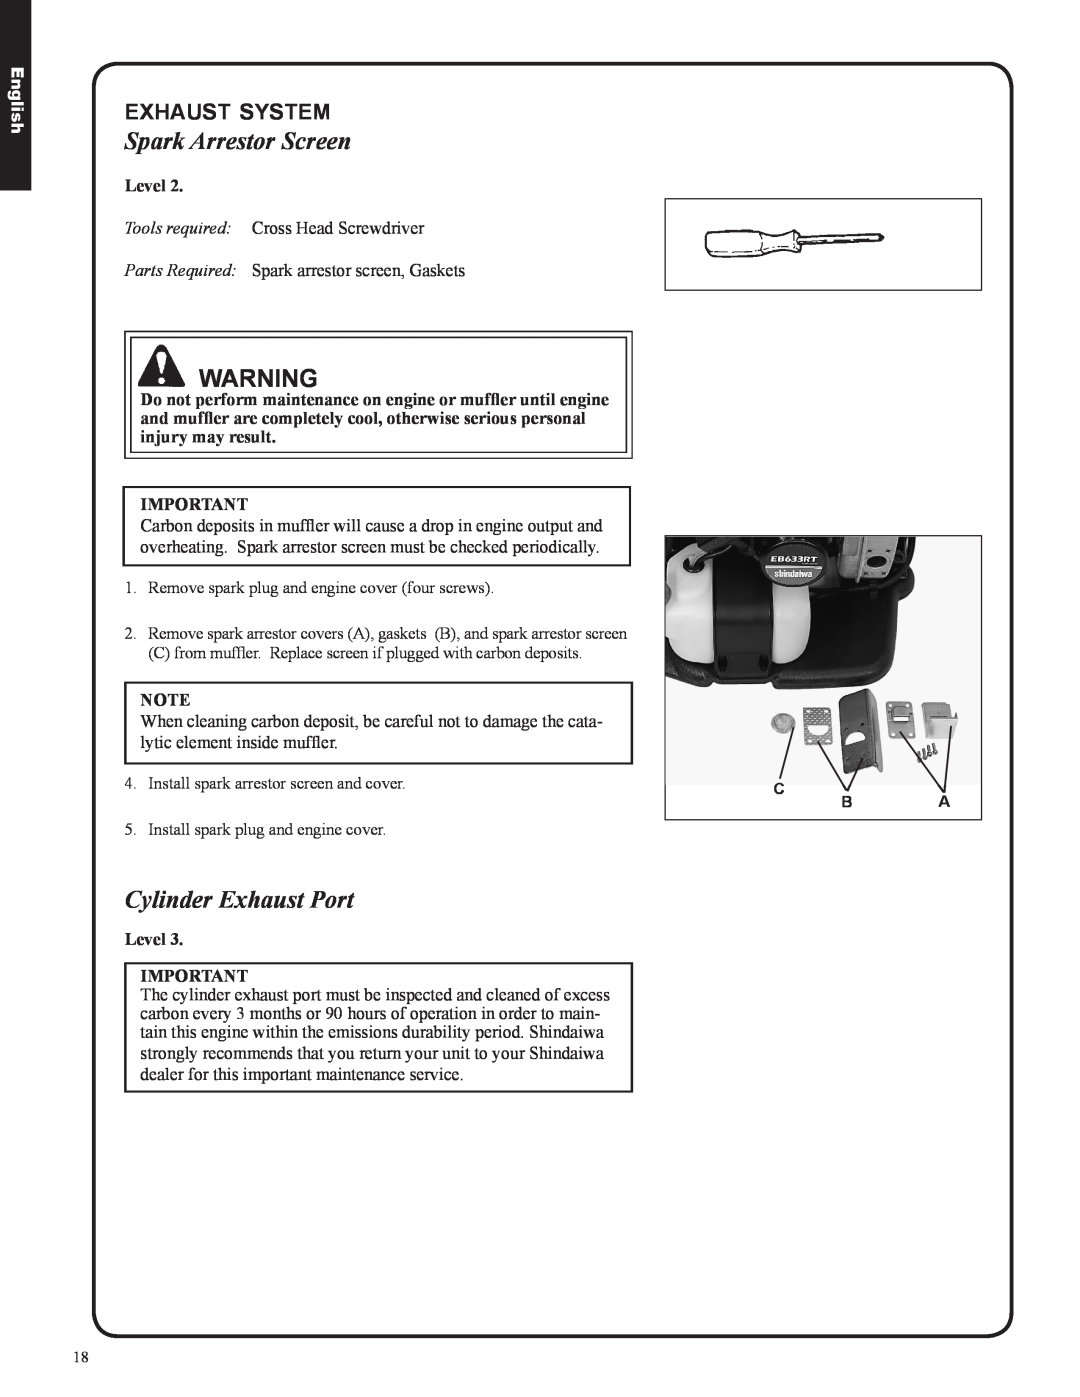 Shindaiwa EB633RT, 82050 manual Spark Arrestor Screen, Cylinder Exhaust Port, exhaust system, English, Level 